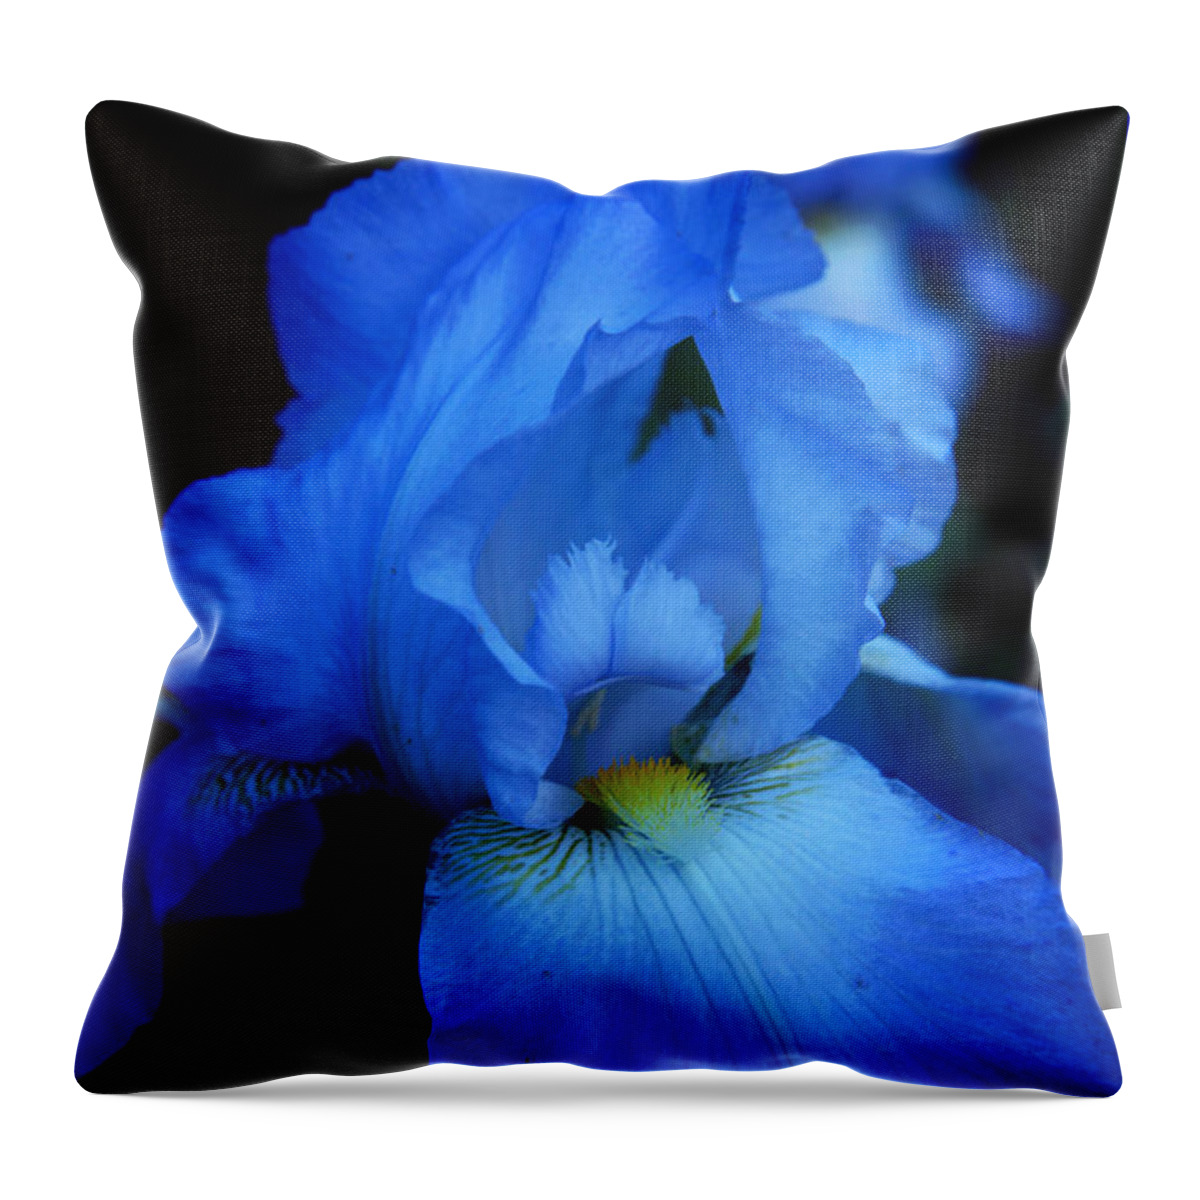 Iris Throw Pillow featuring the photograph Blue Iris by Toni Hopper